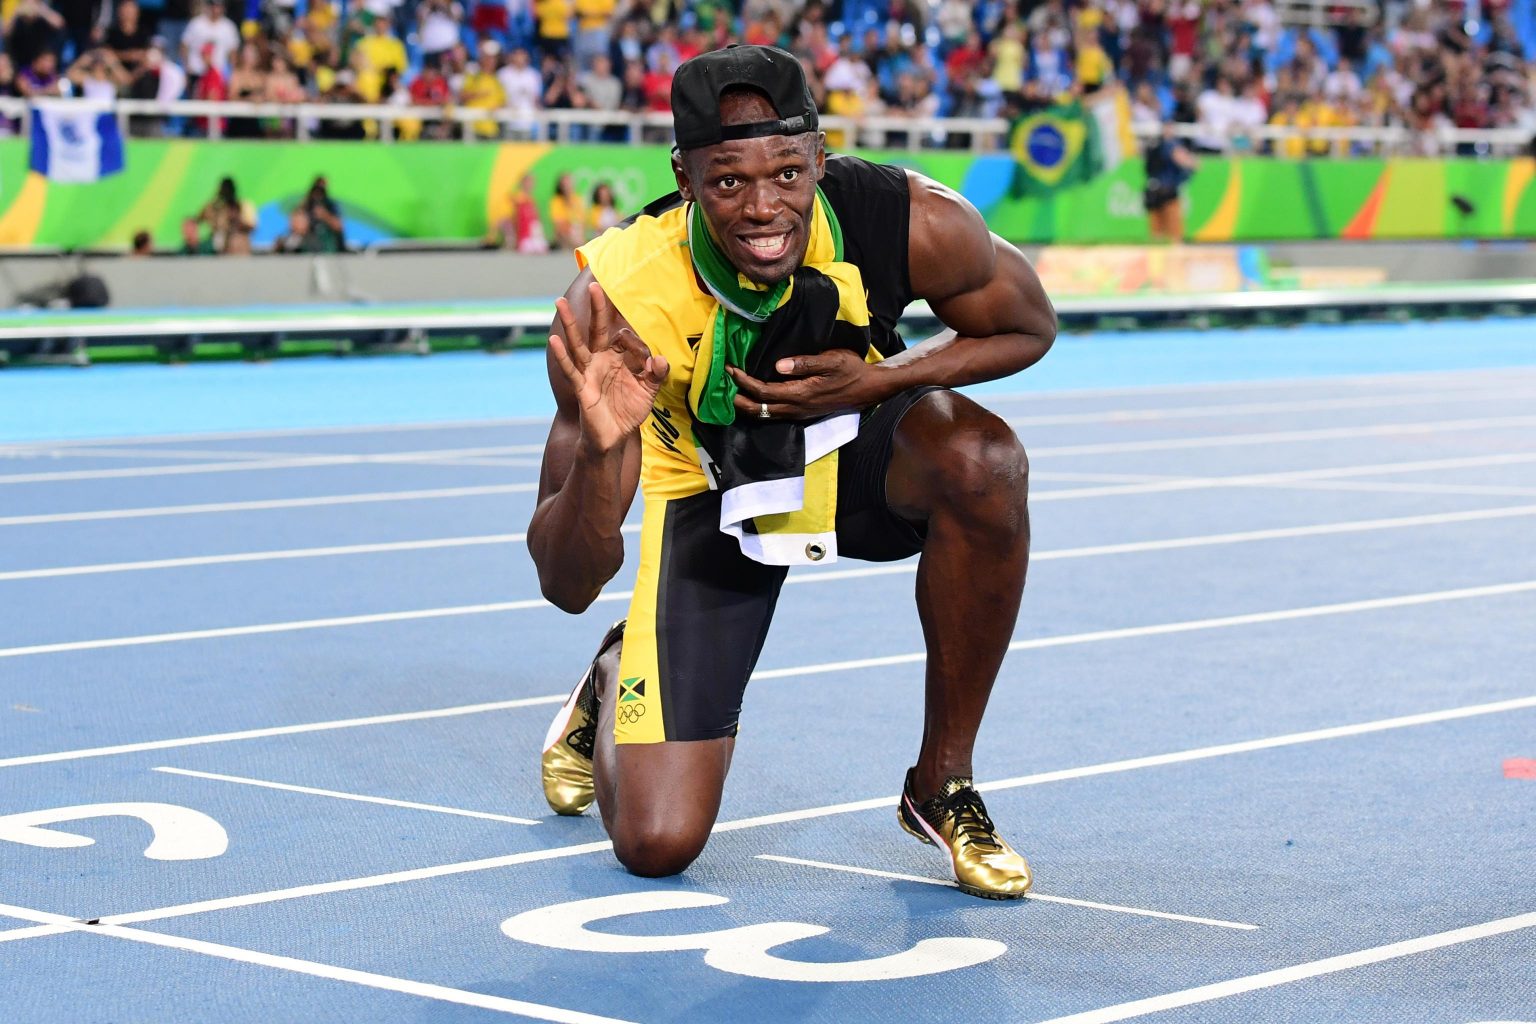 Meet Usain Bolt, the Fastest Man Alive Leverage Edu